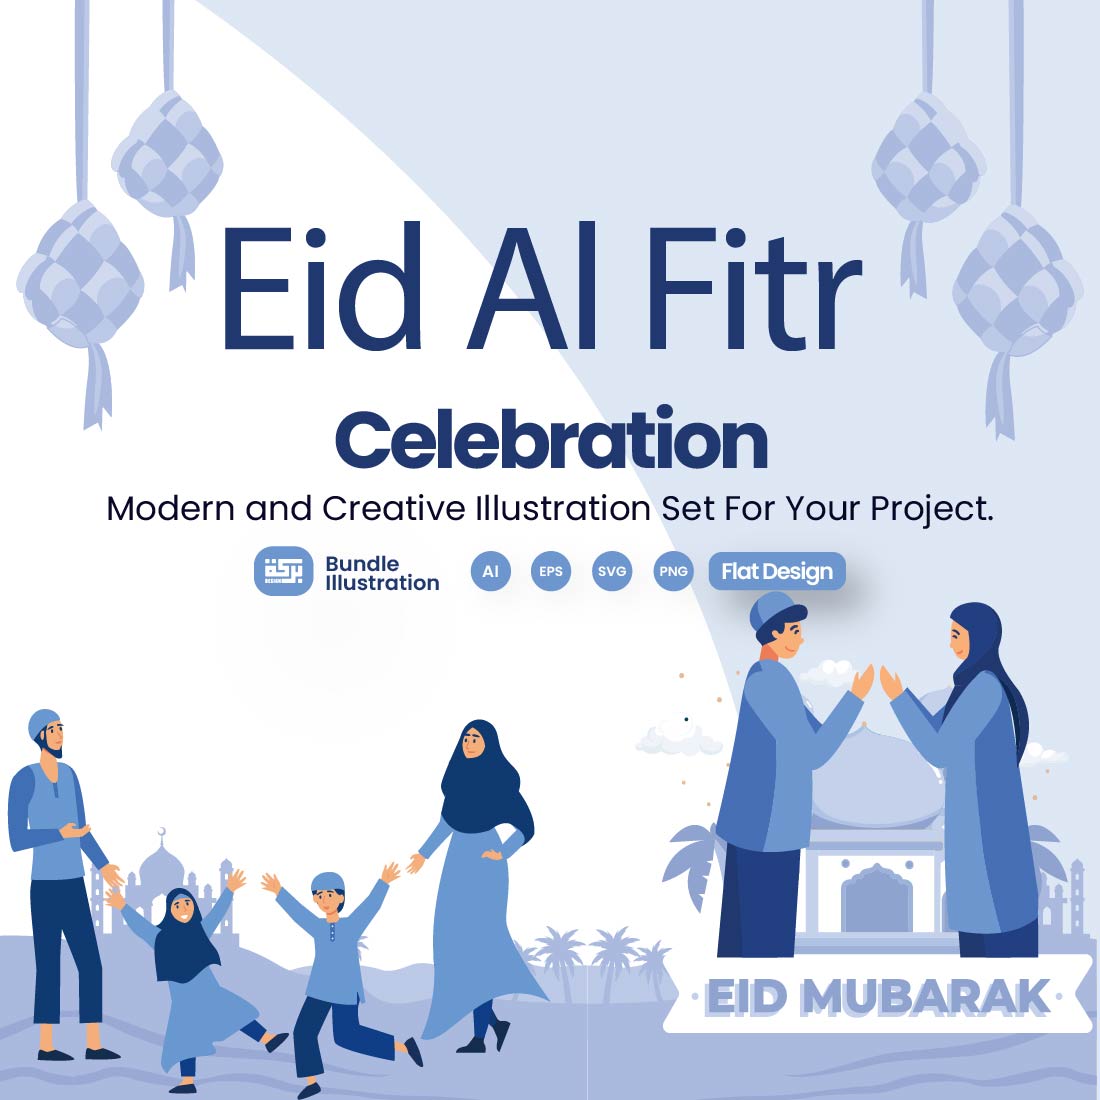 Eid Al Fitr Illustration Design cover image.